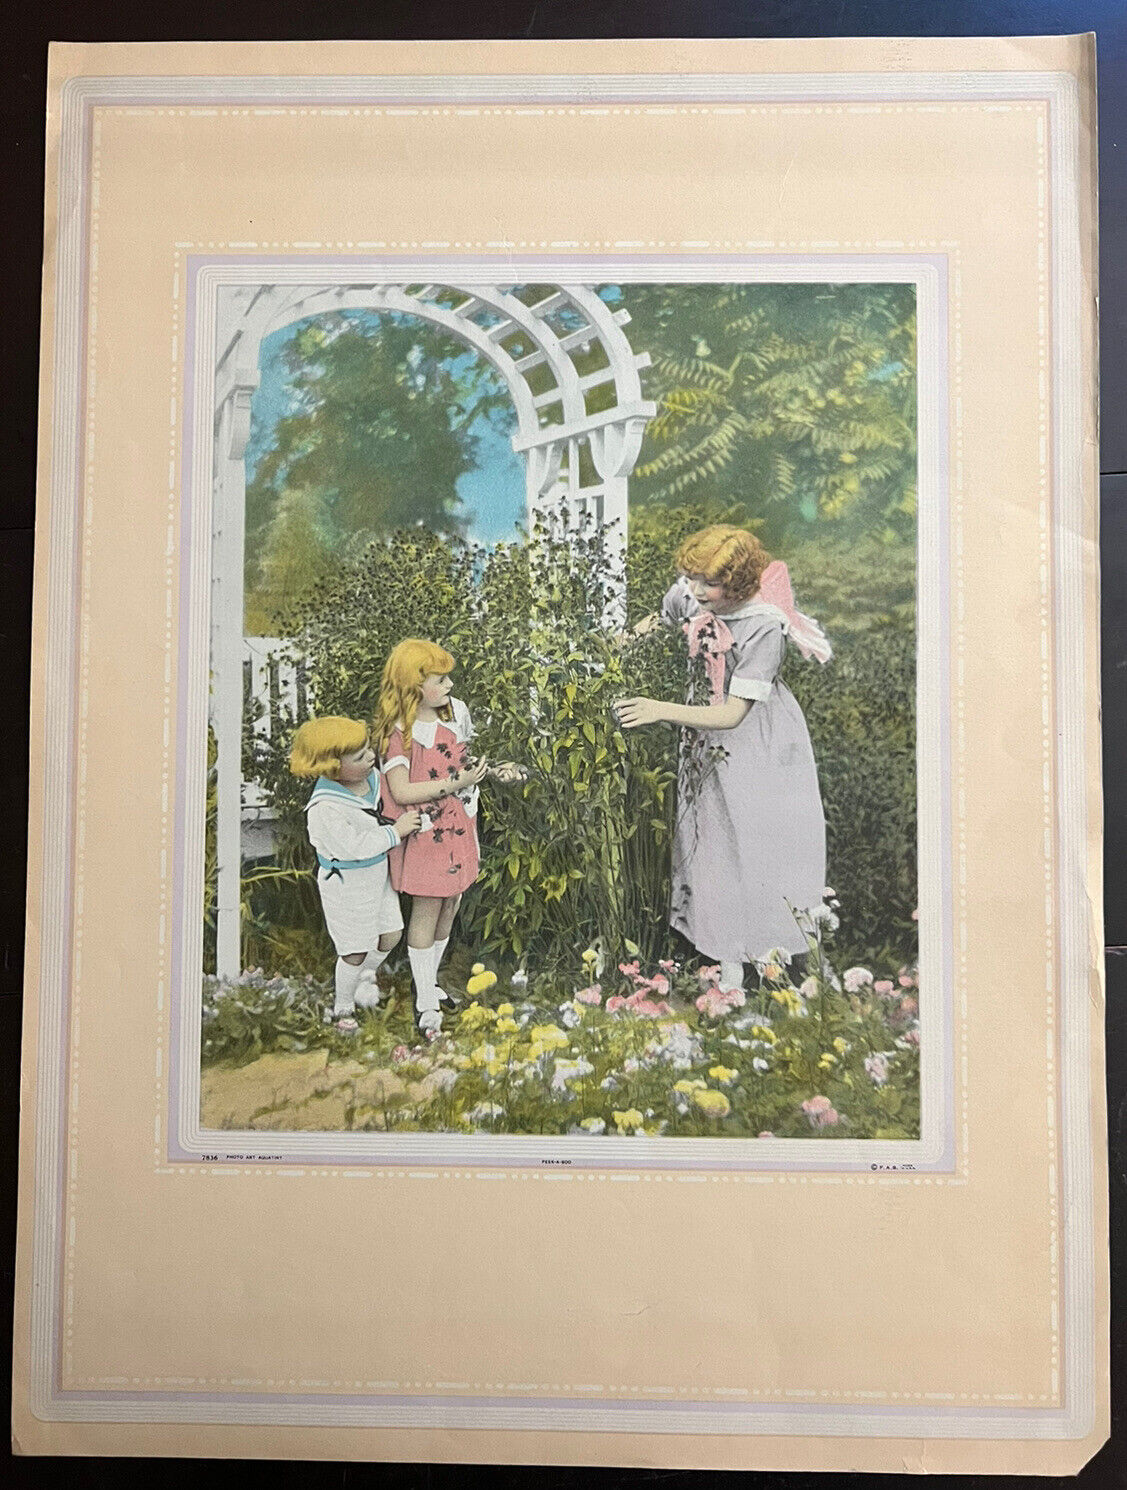 1920s Calendar Sales Sample Print Children Garden “Peek-a-boo” Photo Aquatint